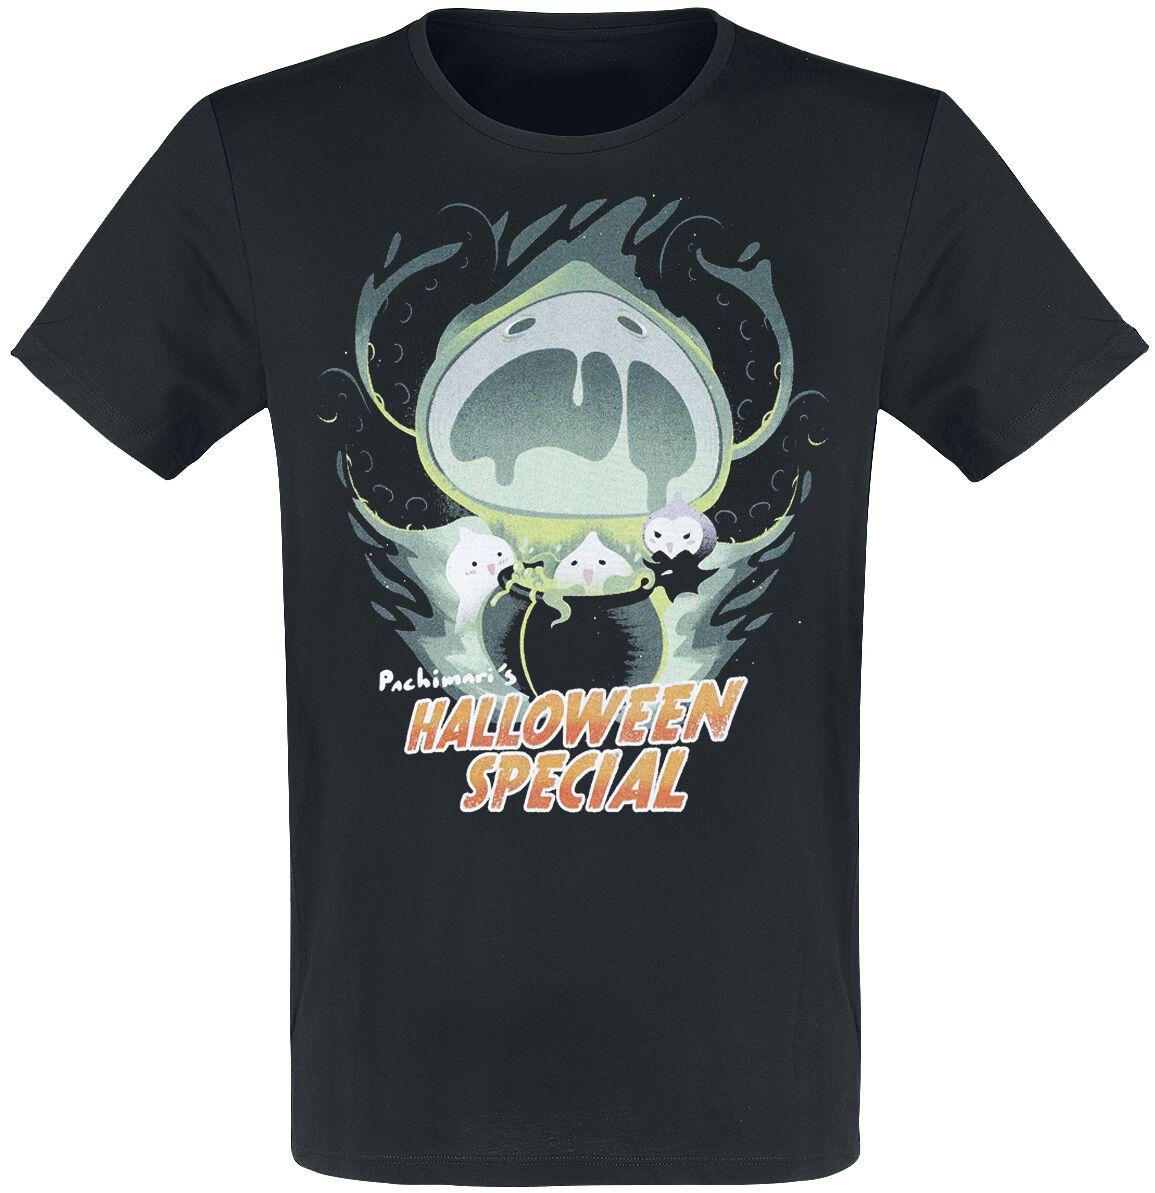 Overwatch Pachimari - Pachiween Special T-Shirt black